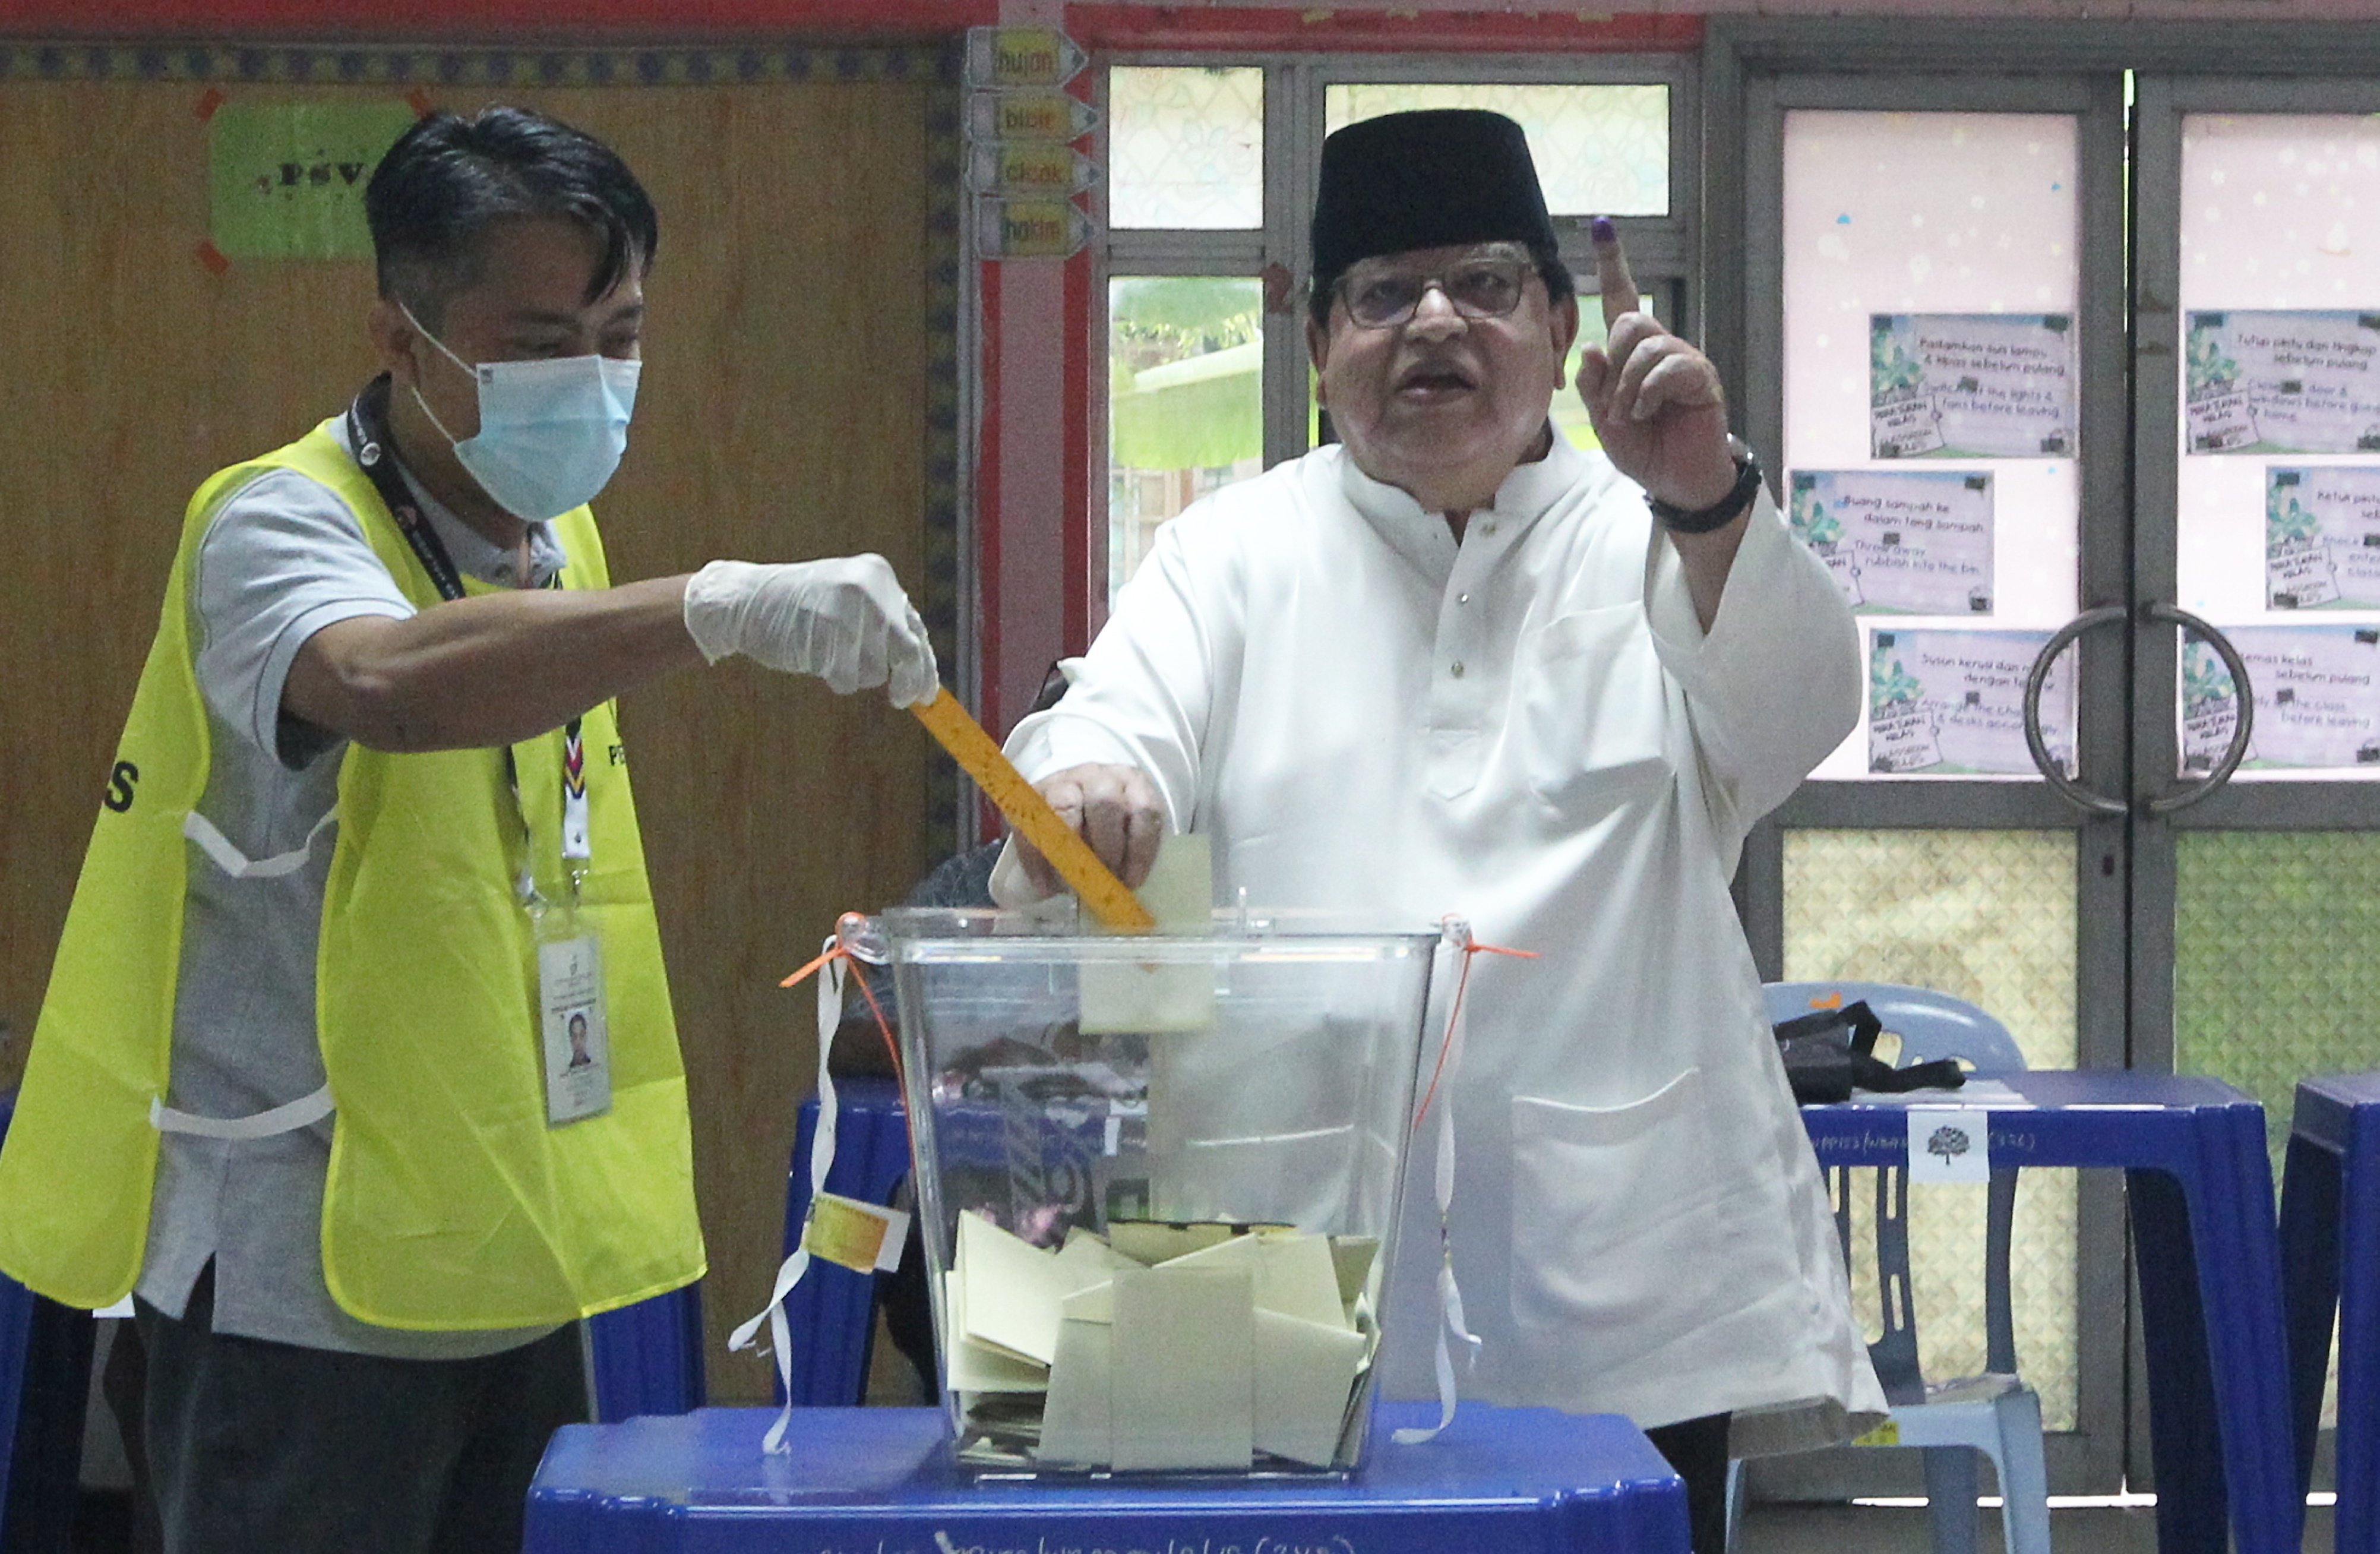 Barisan Nasional P125 candidate for the Putrajaya Parliament, Datuk Seri Tengku Adnan Tengku Mansor voted in conjunction with the 15th General Election in Putrajaya. - NSTP/MOHD FADLI HAMZAH